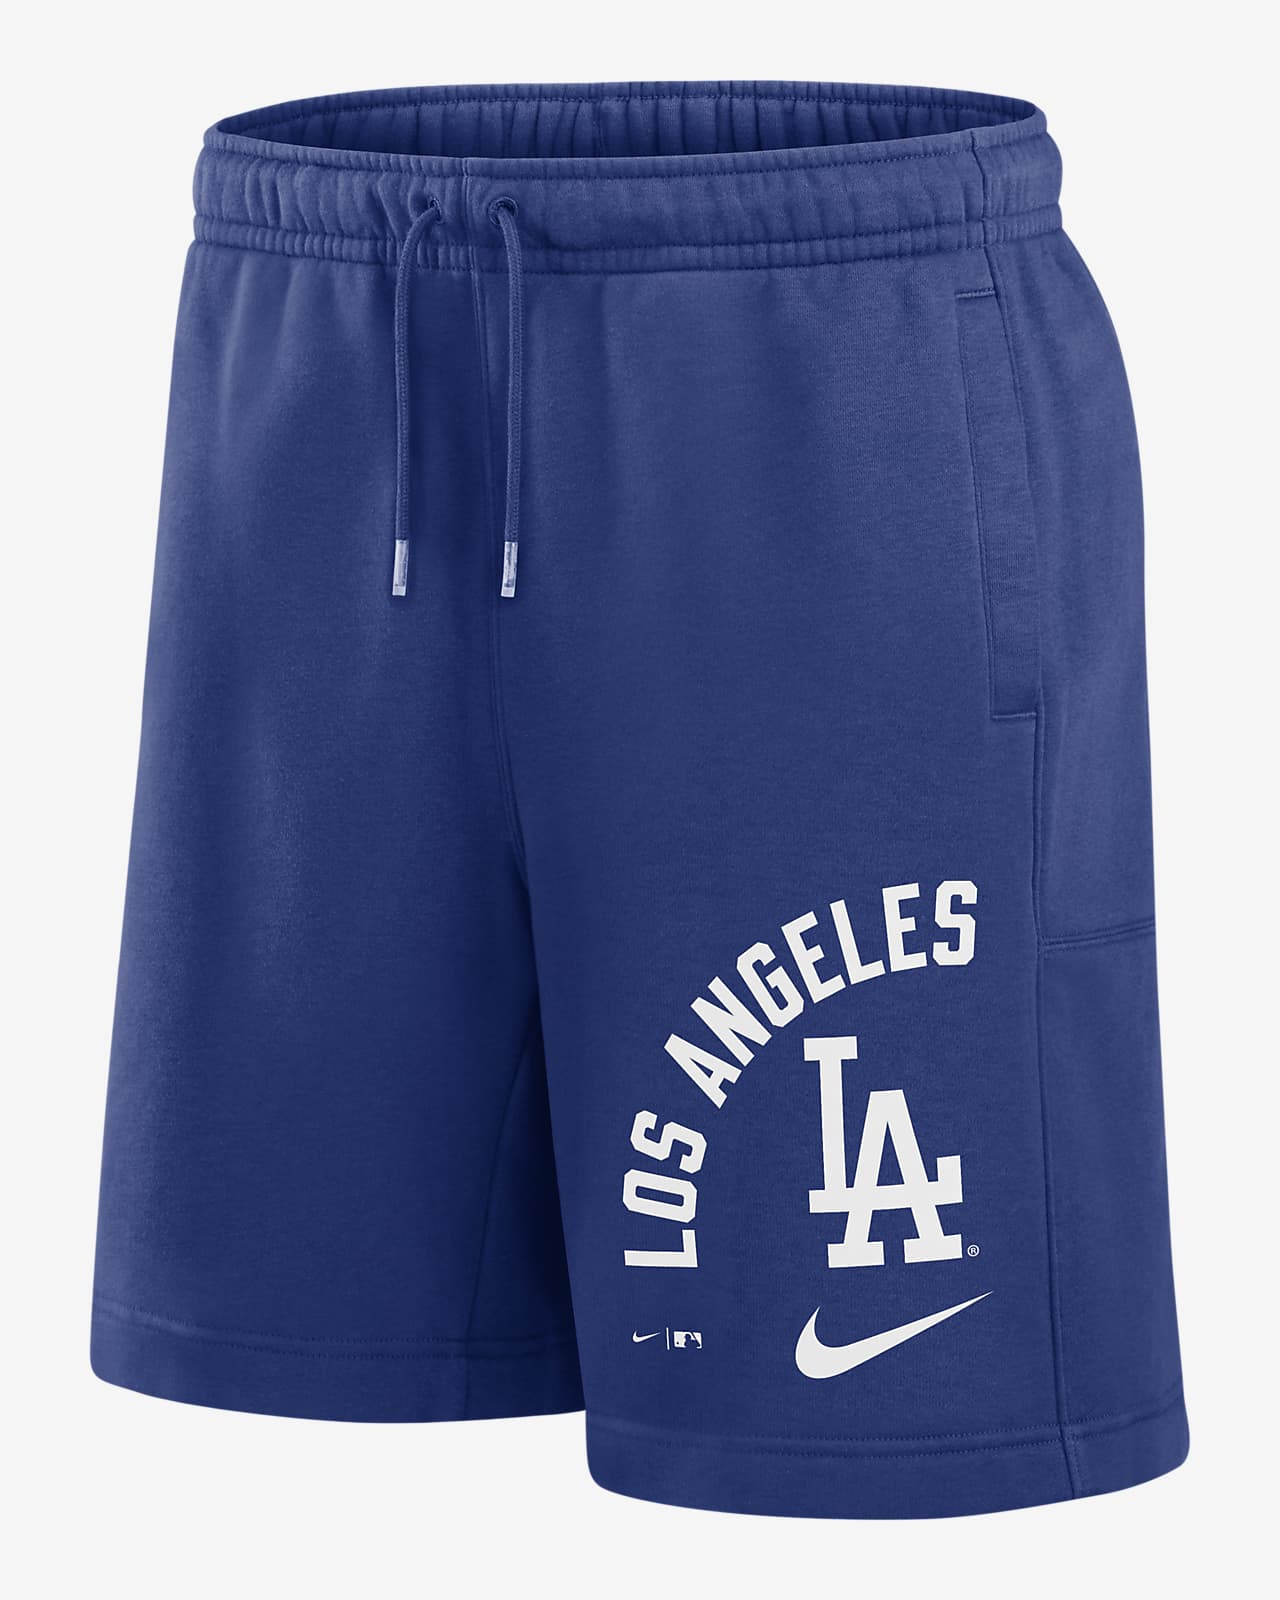 Los Angeles Dodgers Arched Kicker Men's Nike MLB Shorts